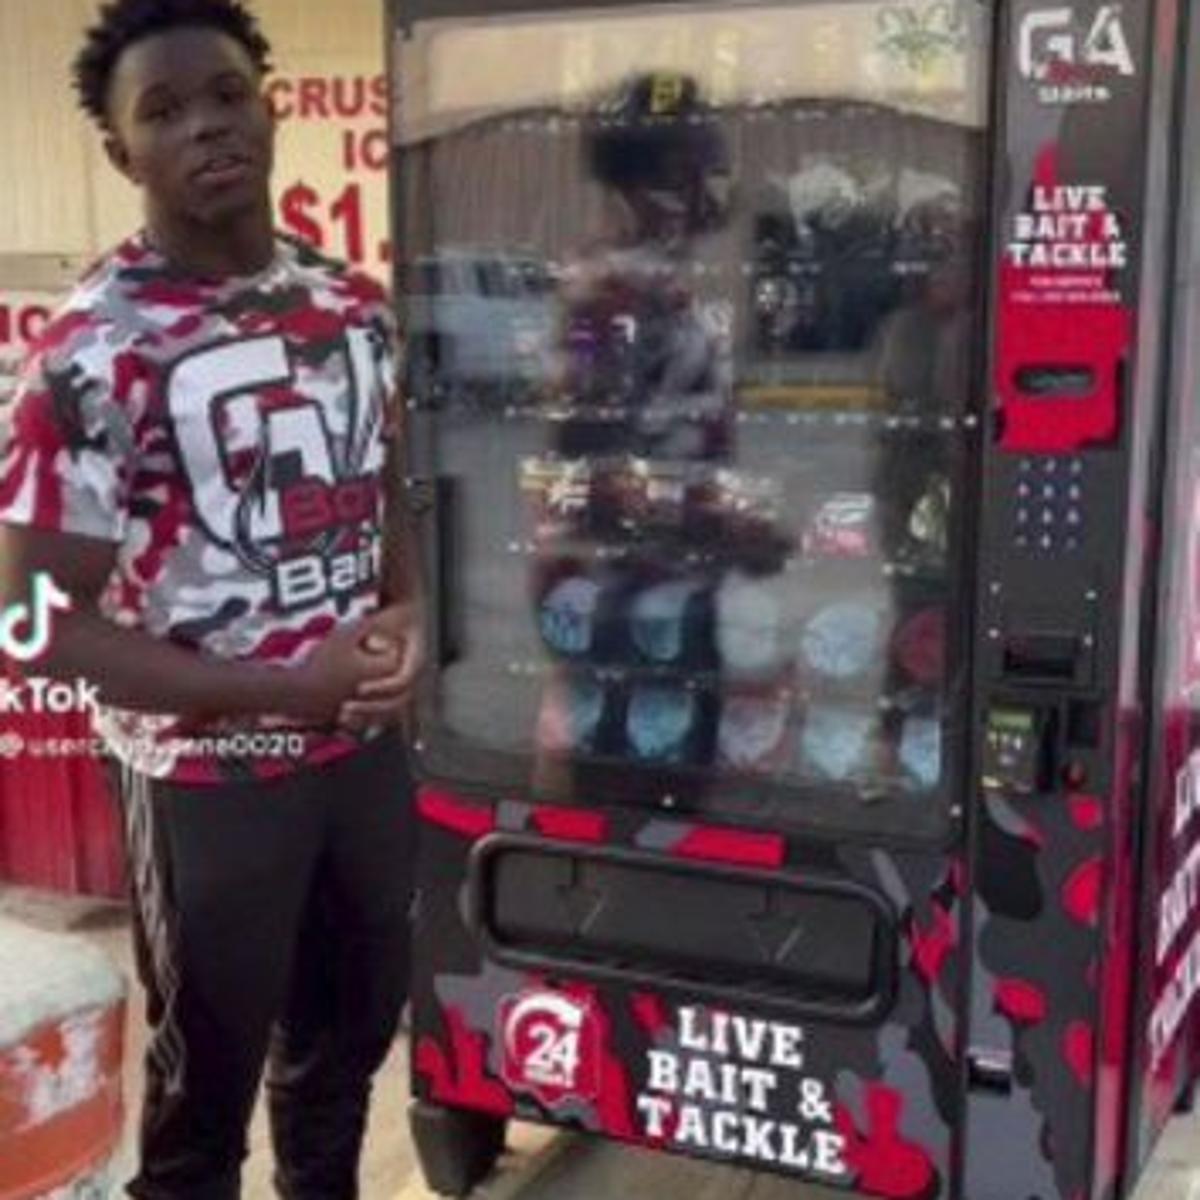 Teen launches live bait vending machine, Local News